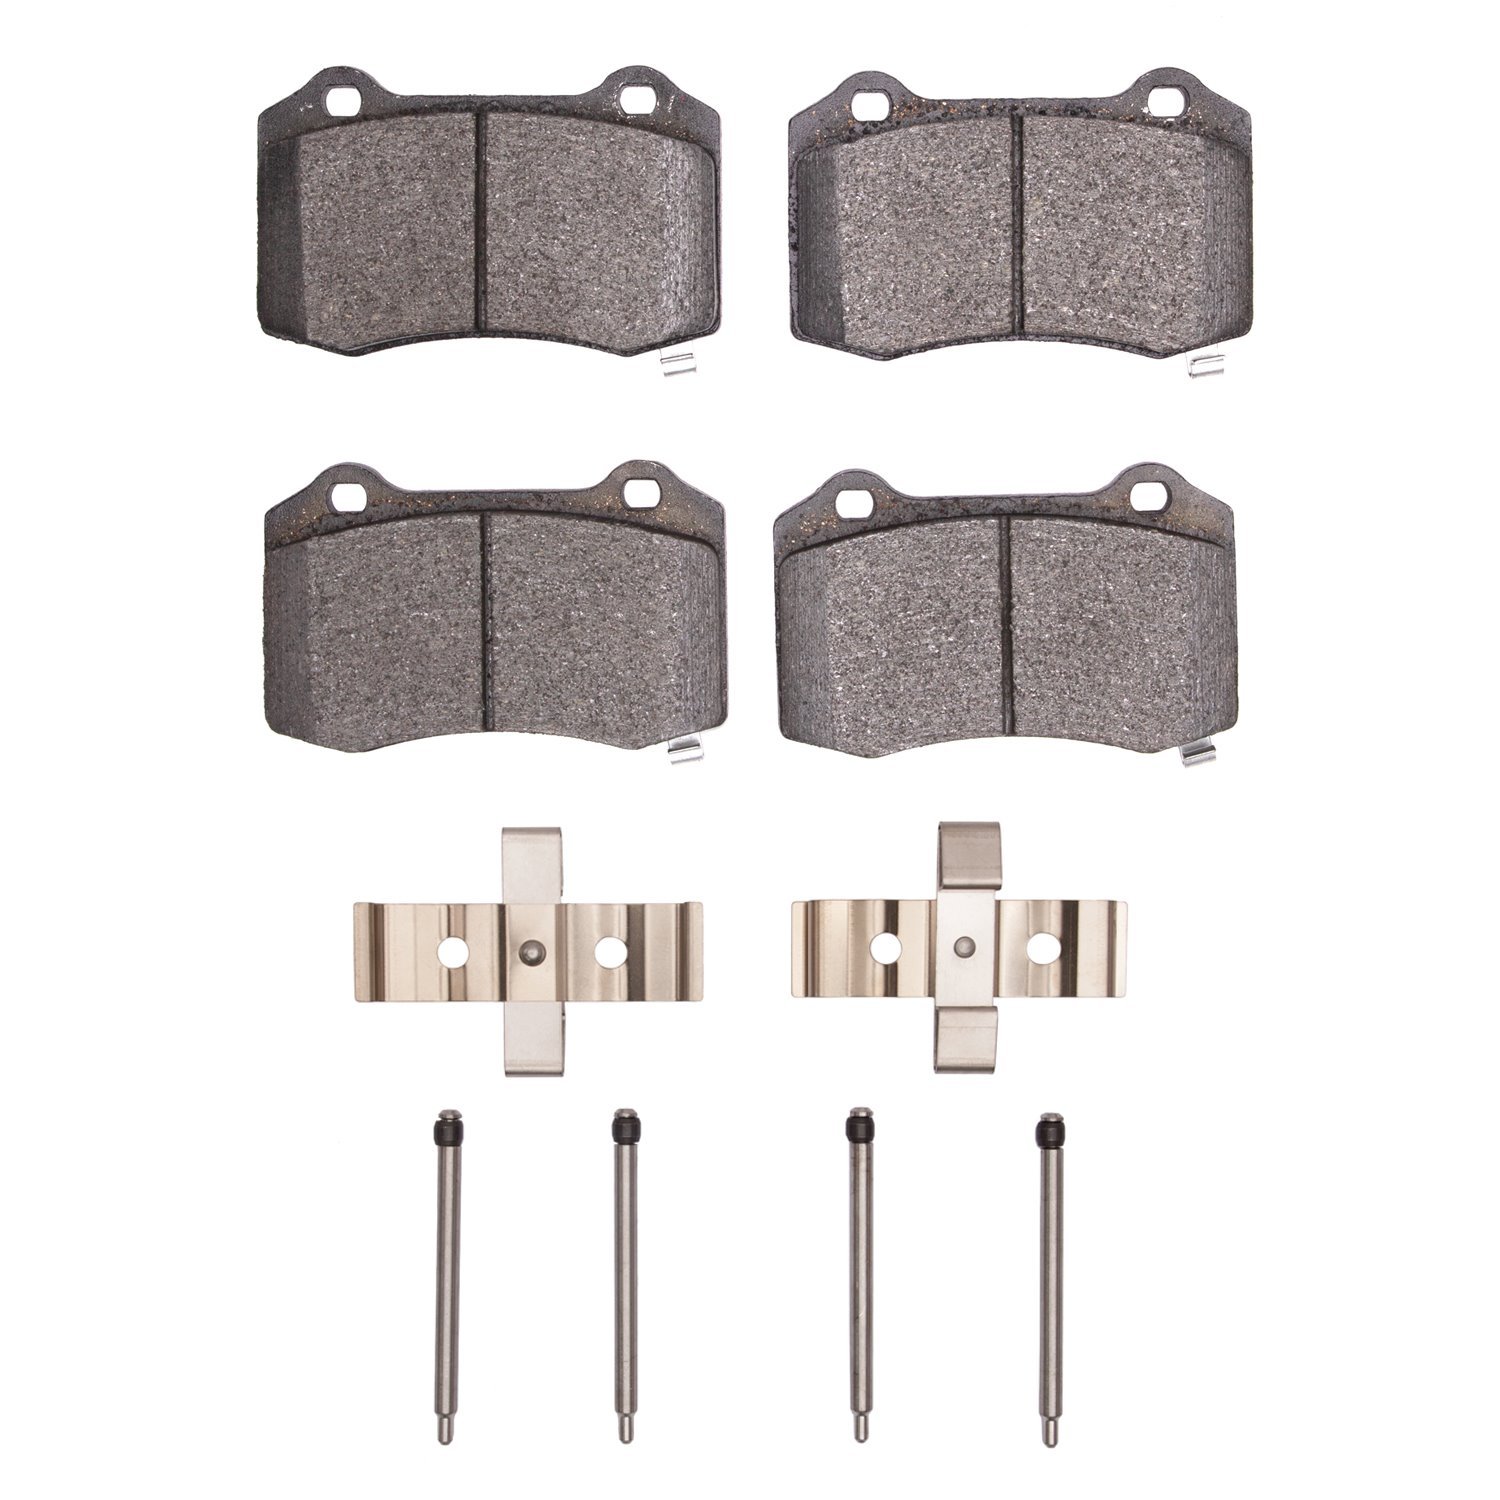 1310-1053-01 3000-Series Ceramic Brake Pads & Hardware Kit, Fits Select Multiple Makes/Models, Position: Rear